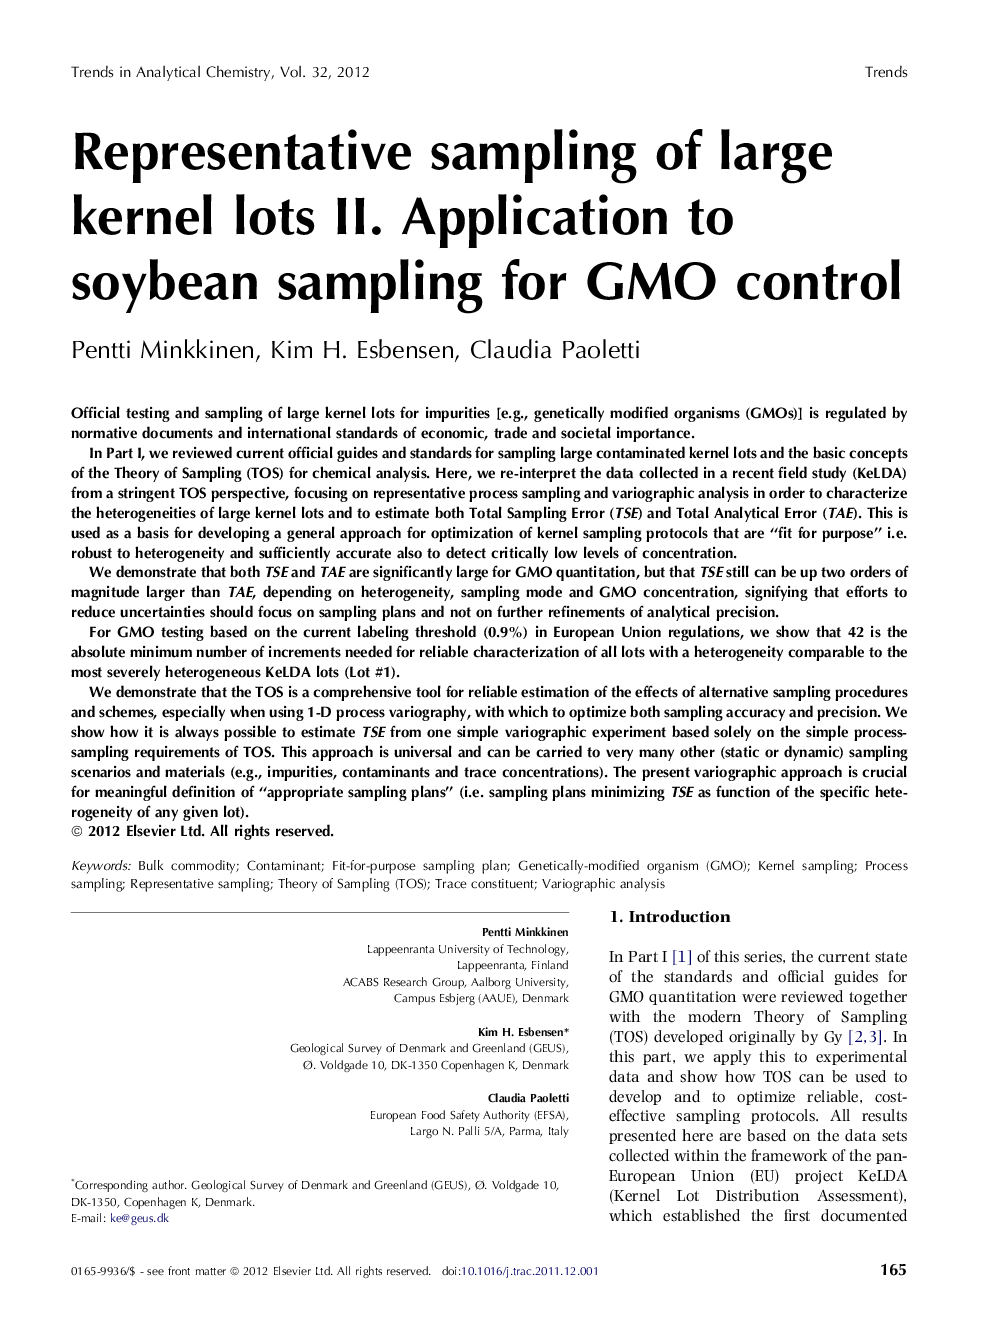 Representative sampling of large kernel lots II. Application to soybean sampling for GMO control